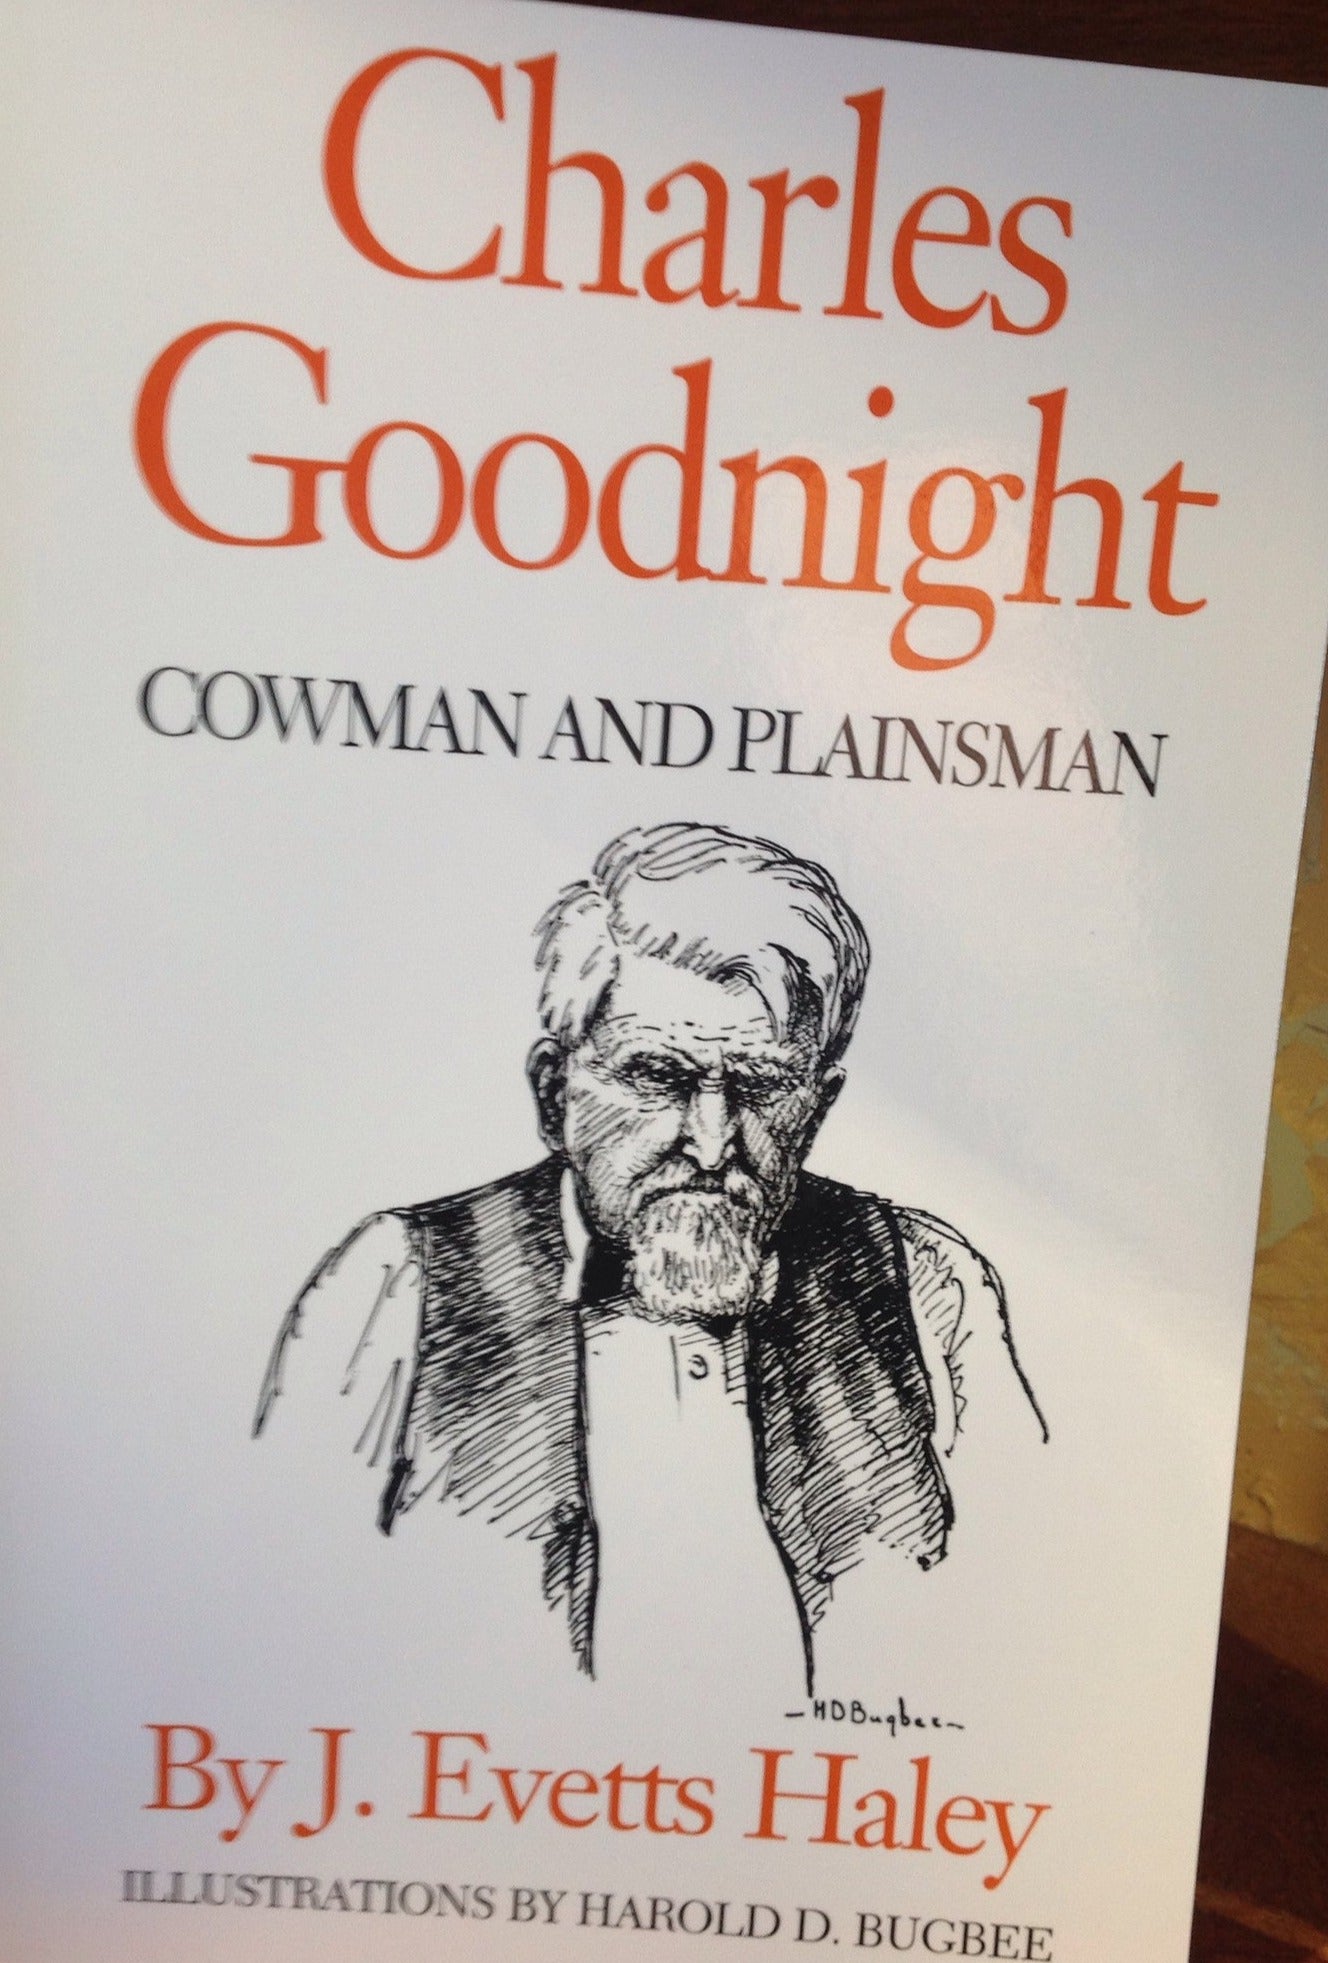 BOOKS - Charles Goodnight: Cowman and Plainsman